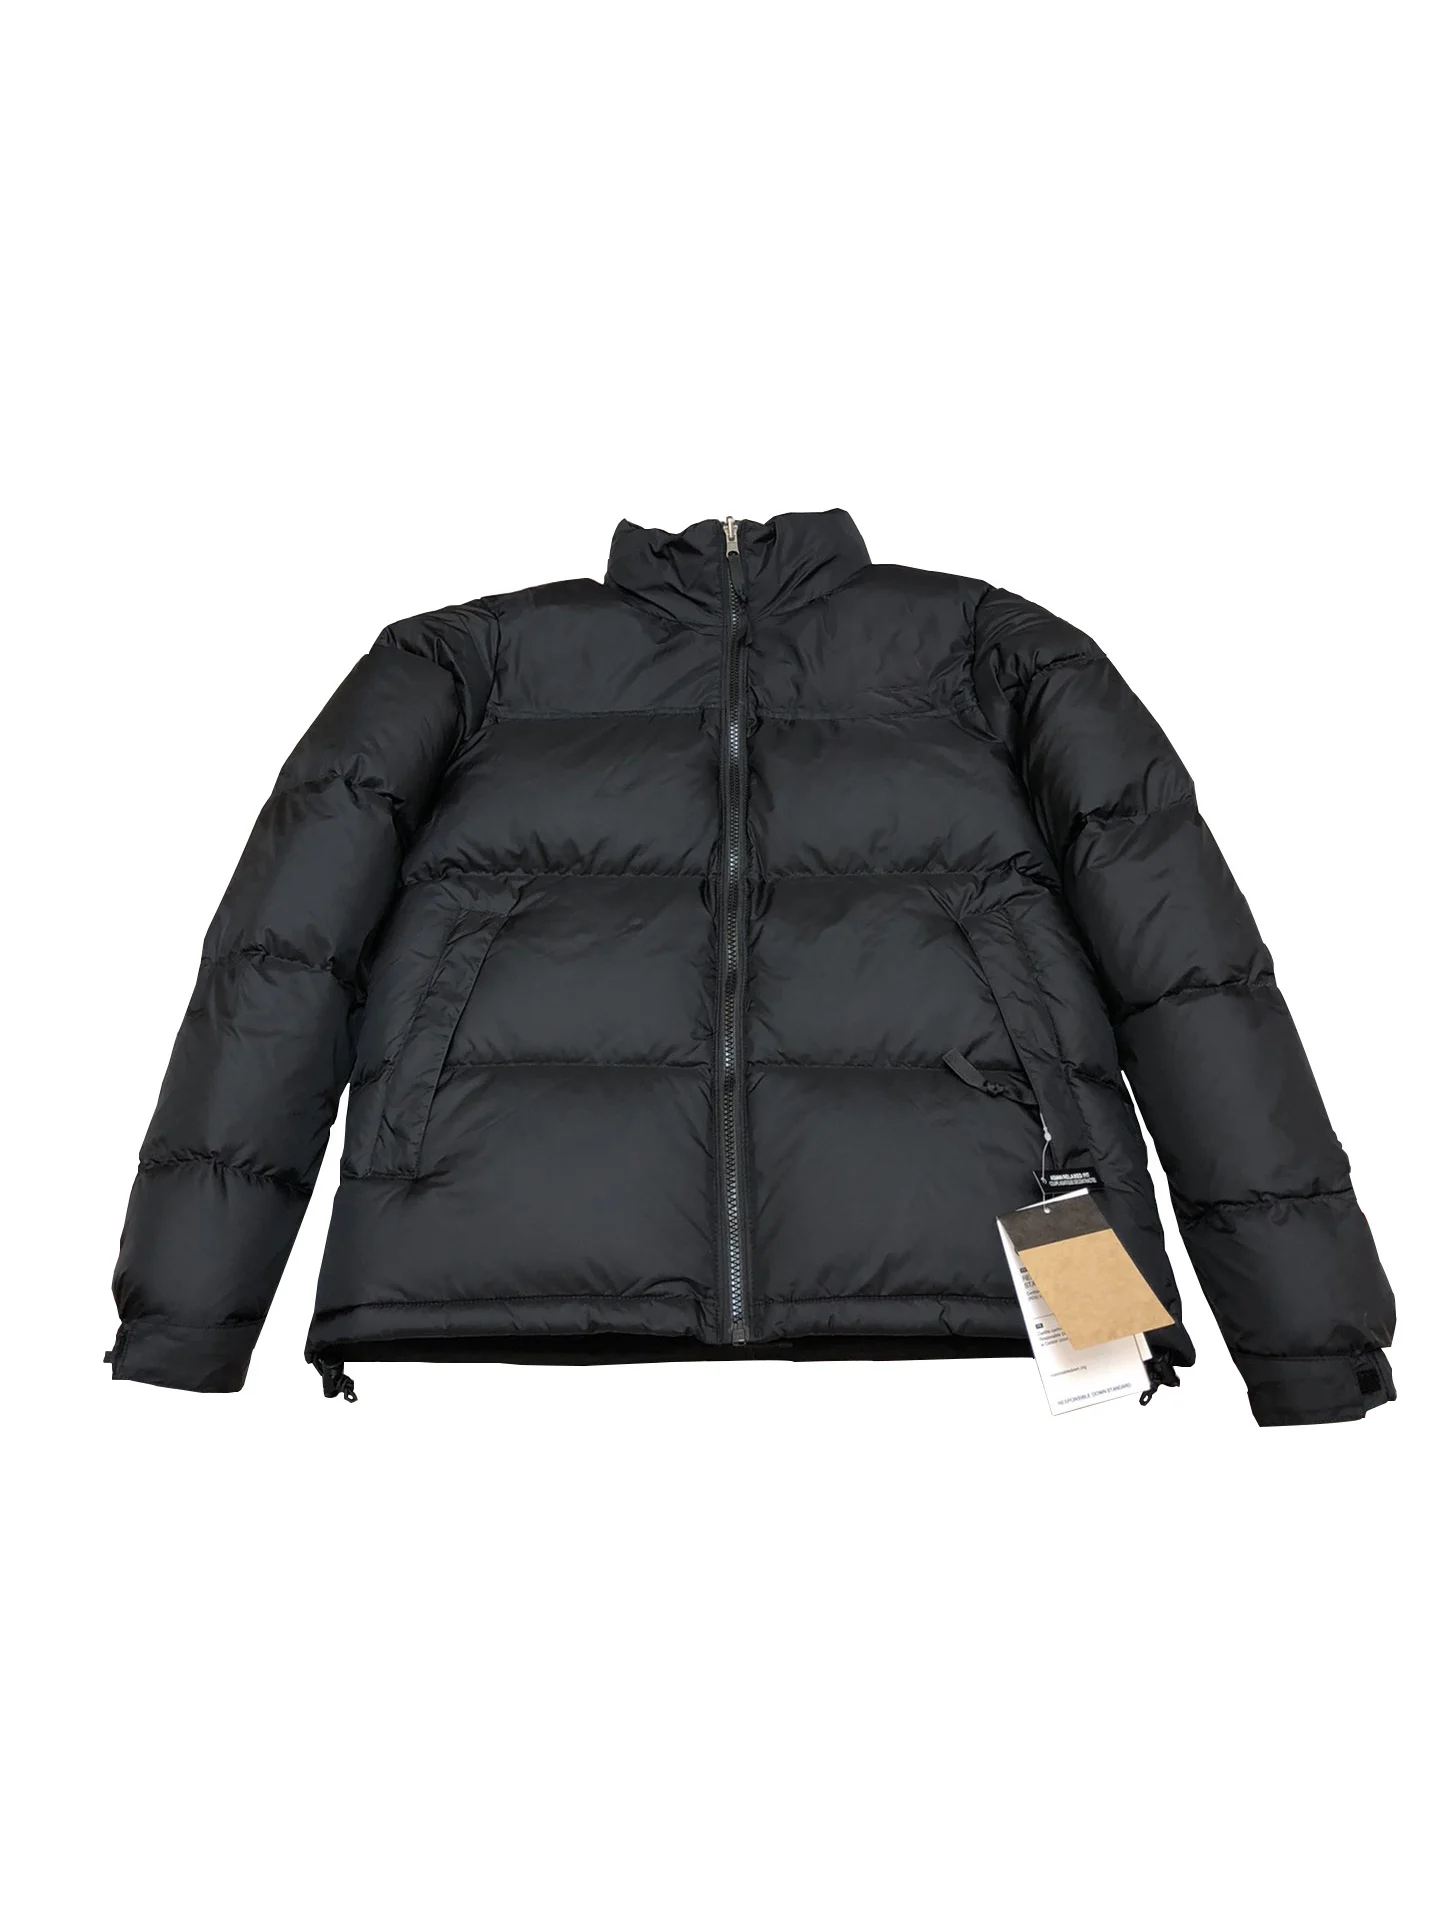 Winter High Quality Down Jacket 1996 Fashion Mens Women's Thick Warm Jacket Bread Jacket Black Duck Down Jacket